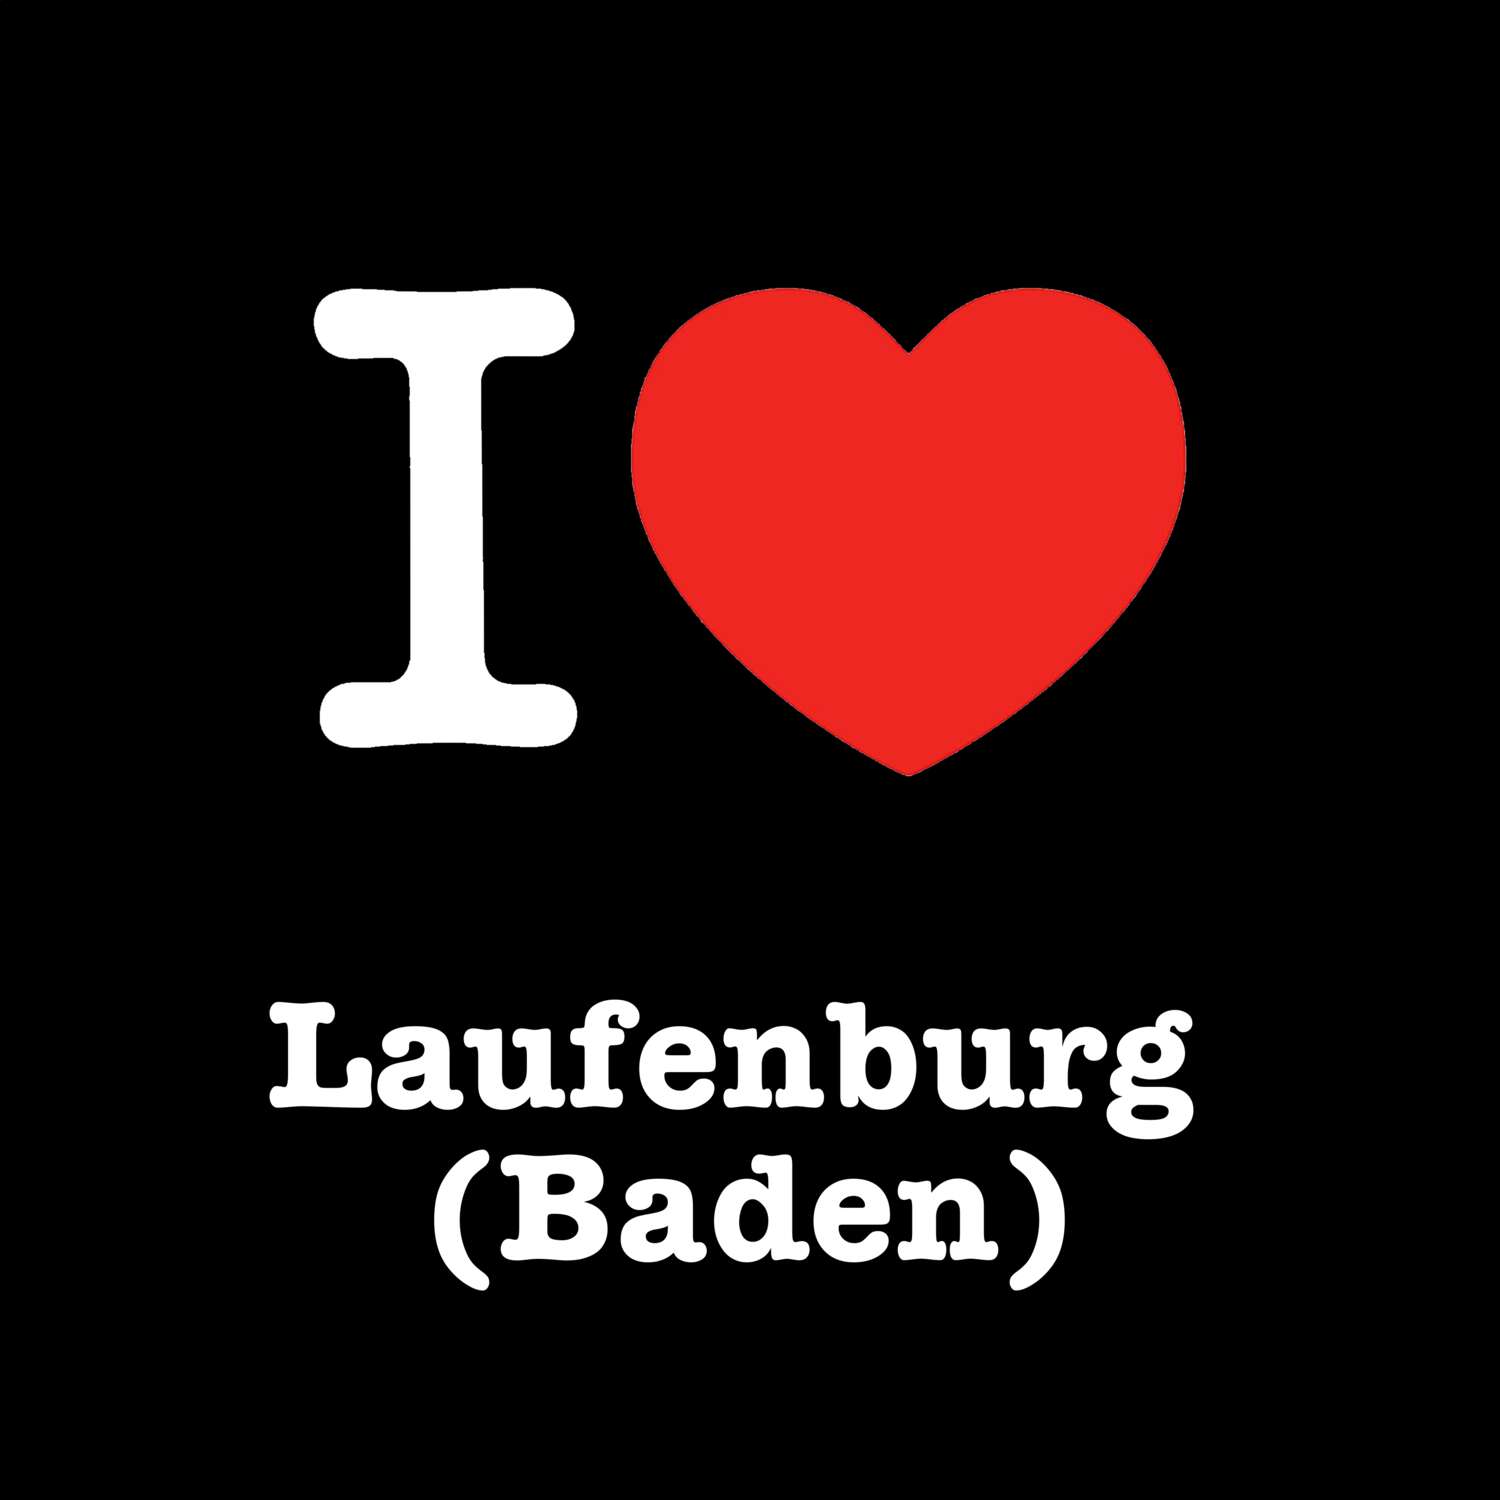 Laufenburg (Baden) T-Shirt »I love«